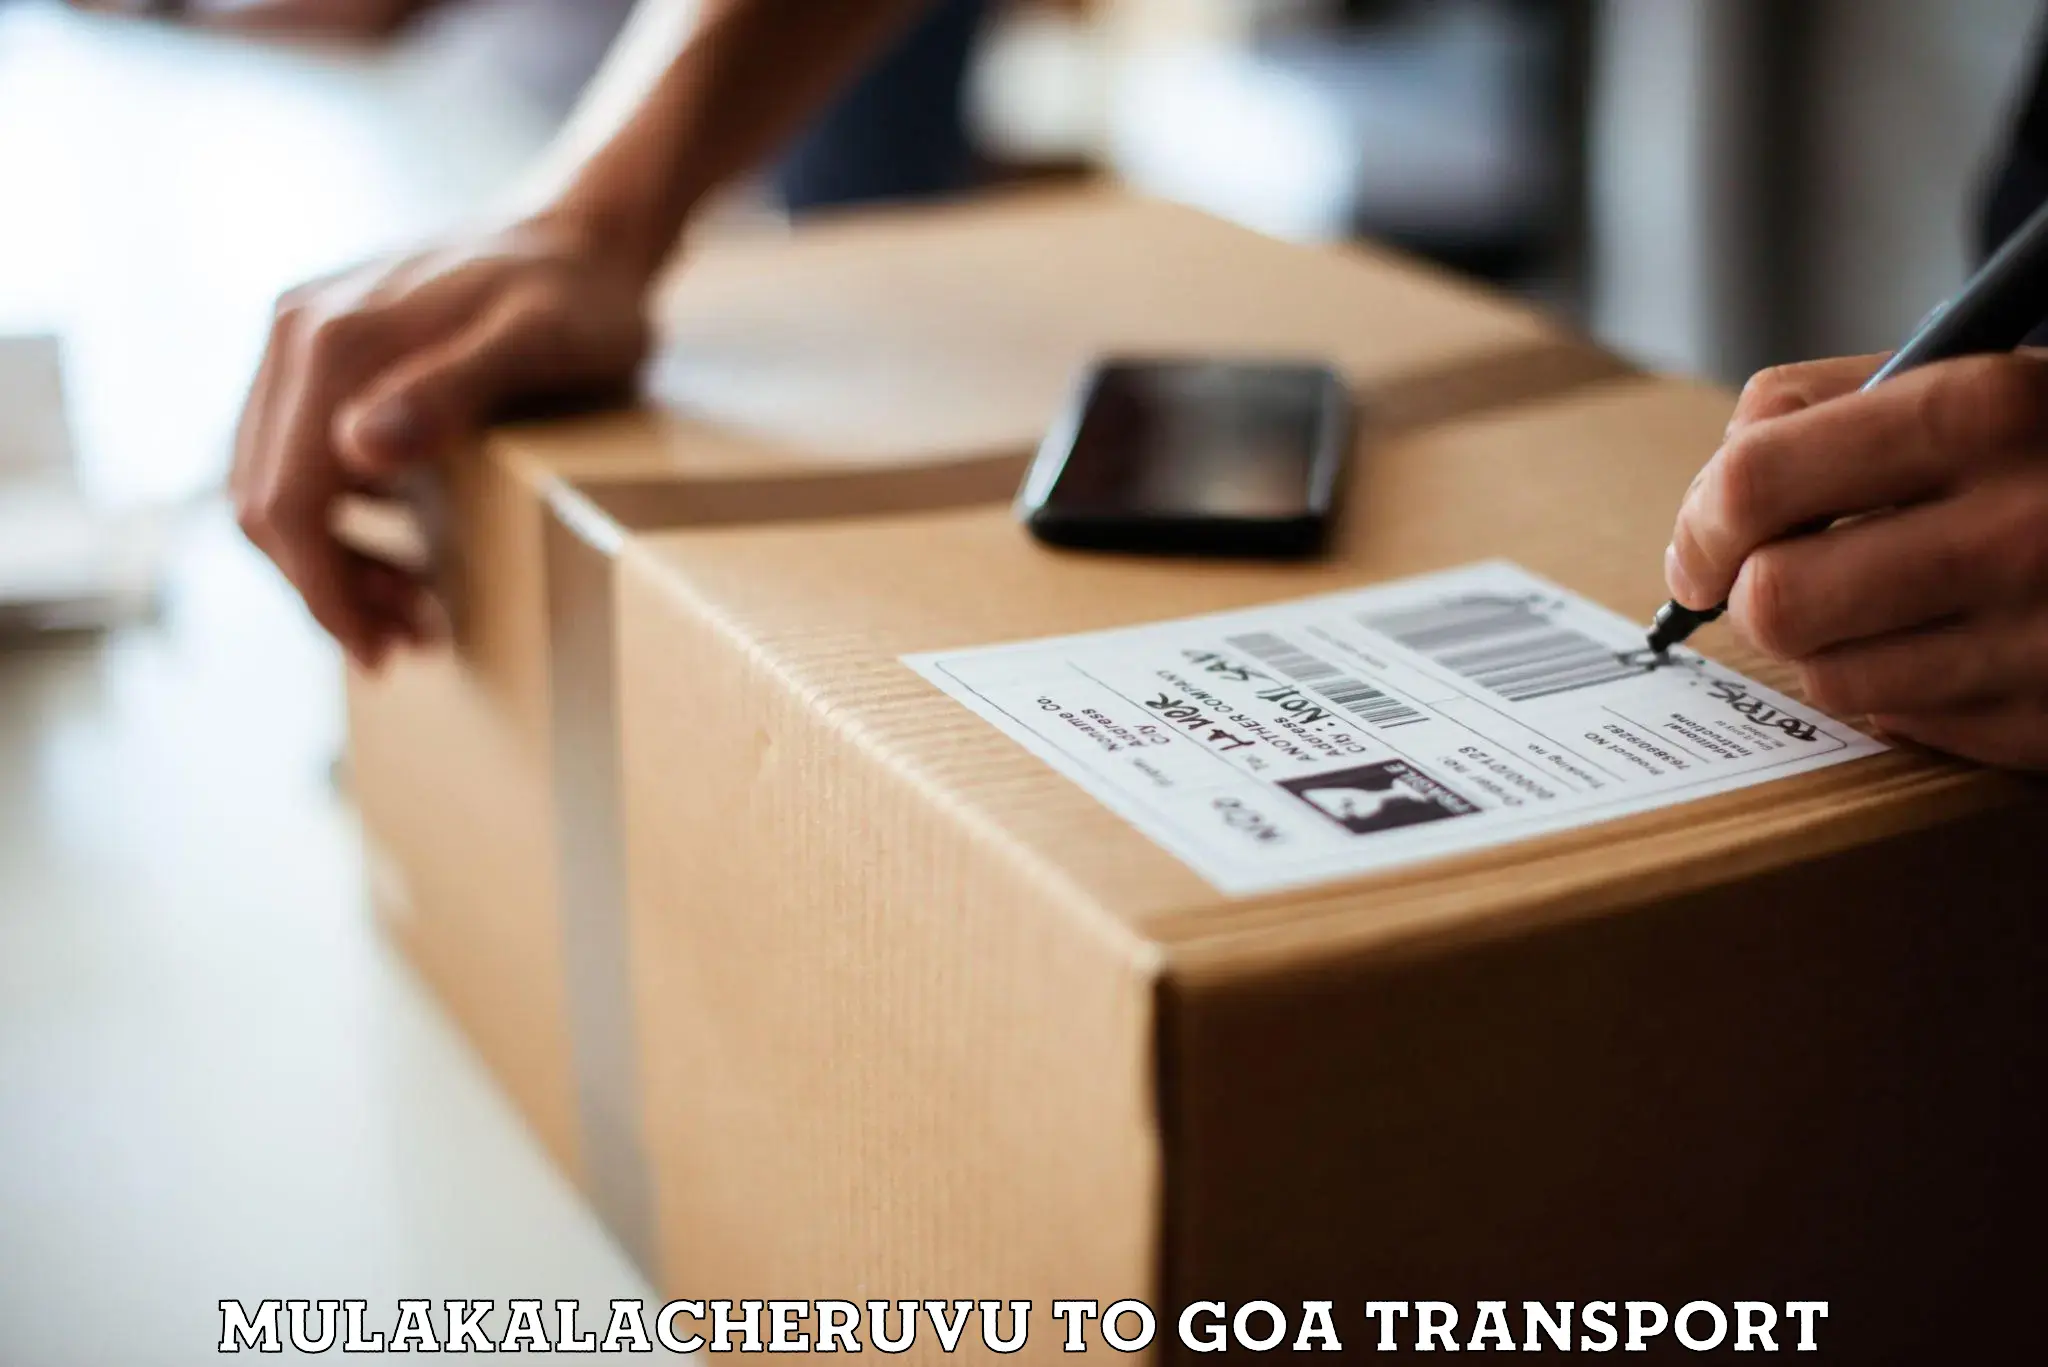 Transport in sharing Mulakalacheruvu to Goa